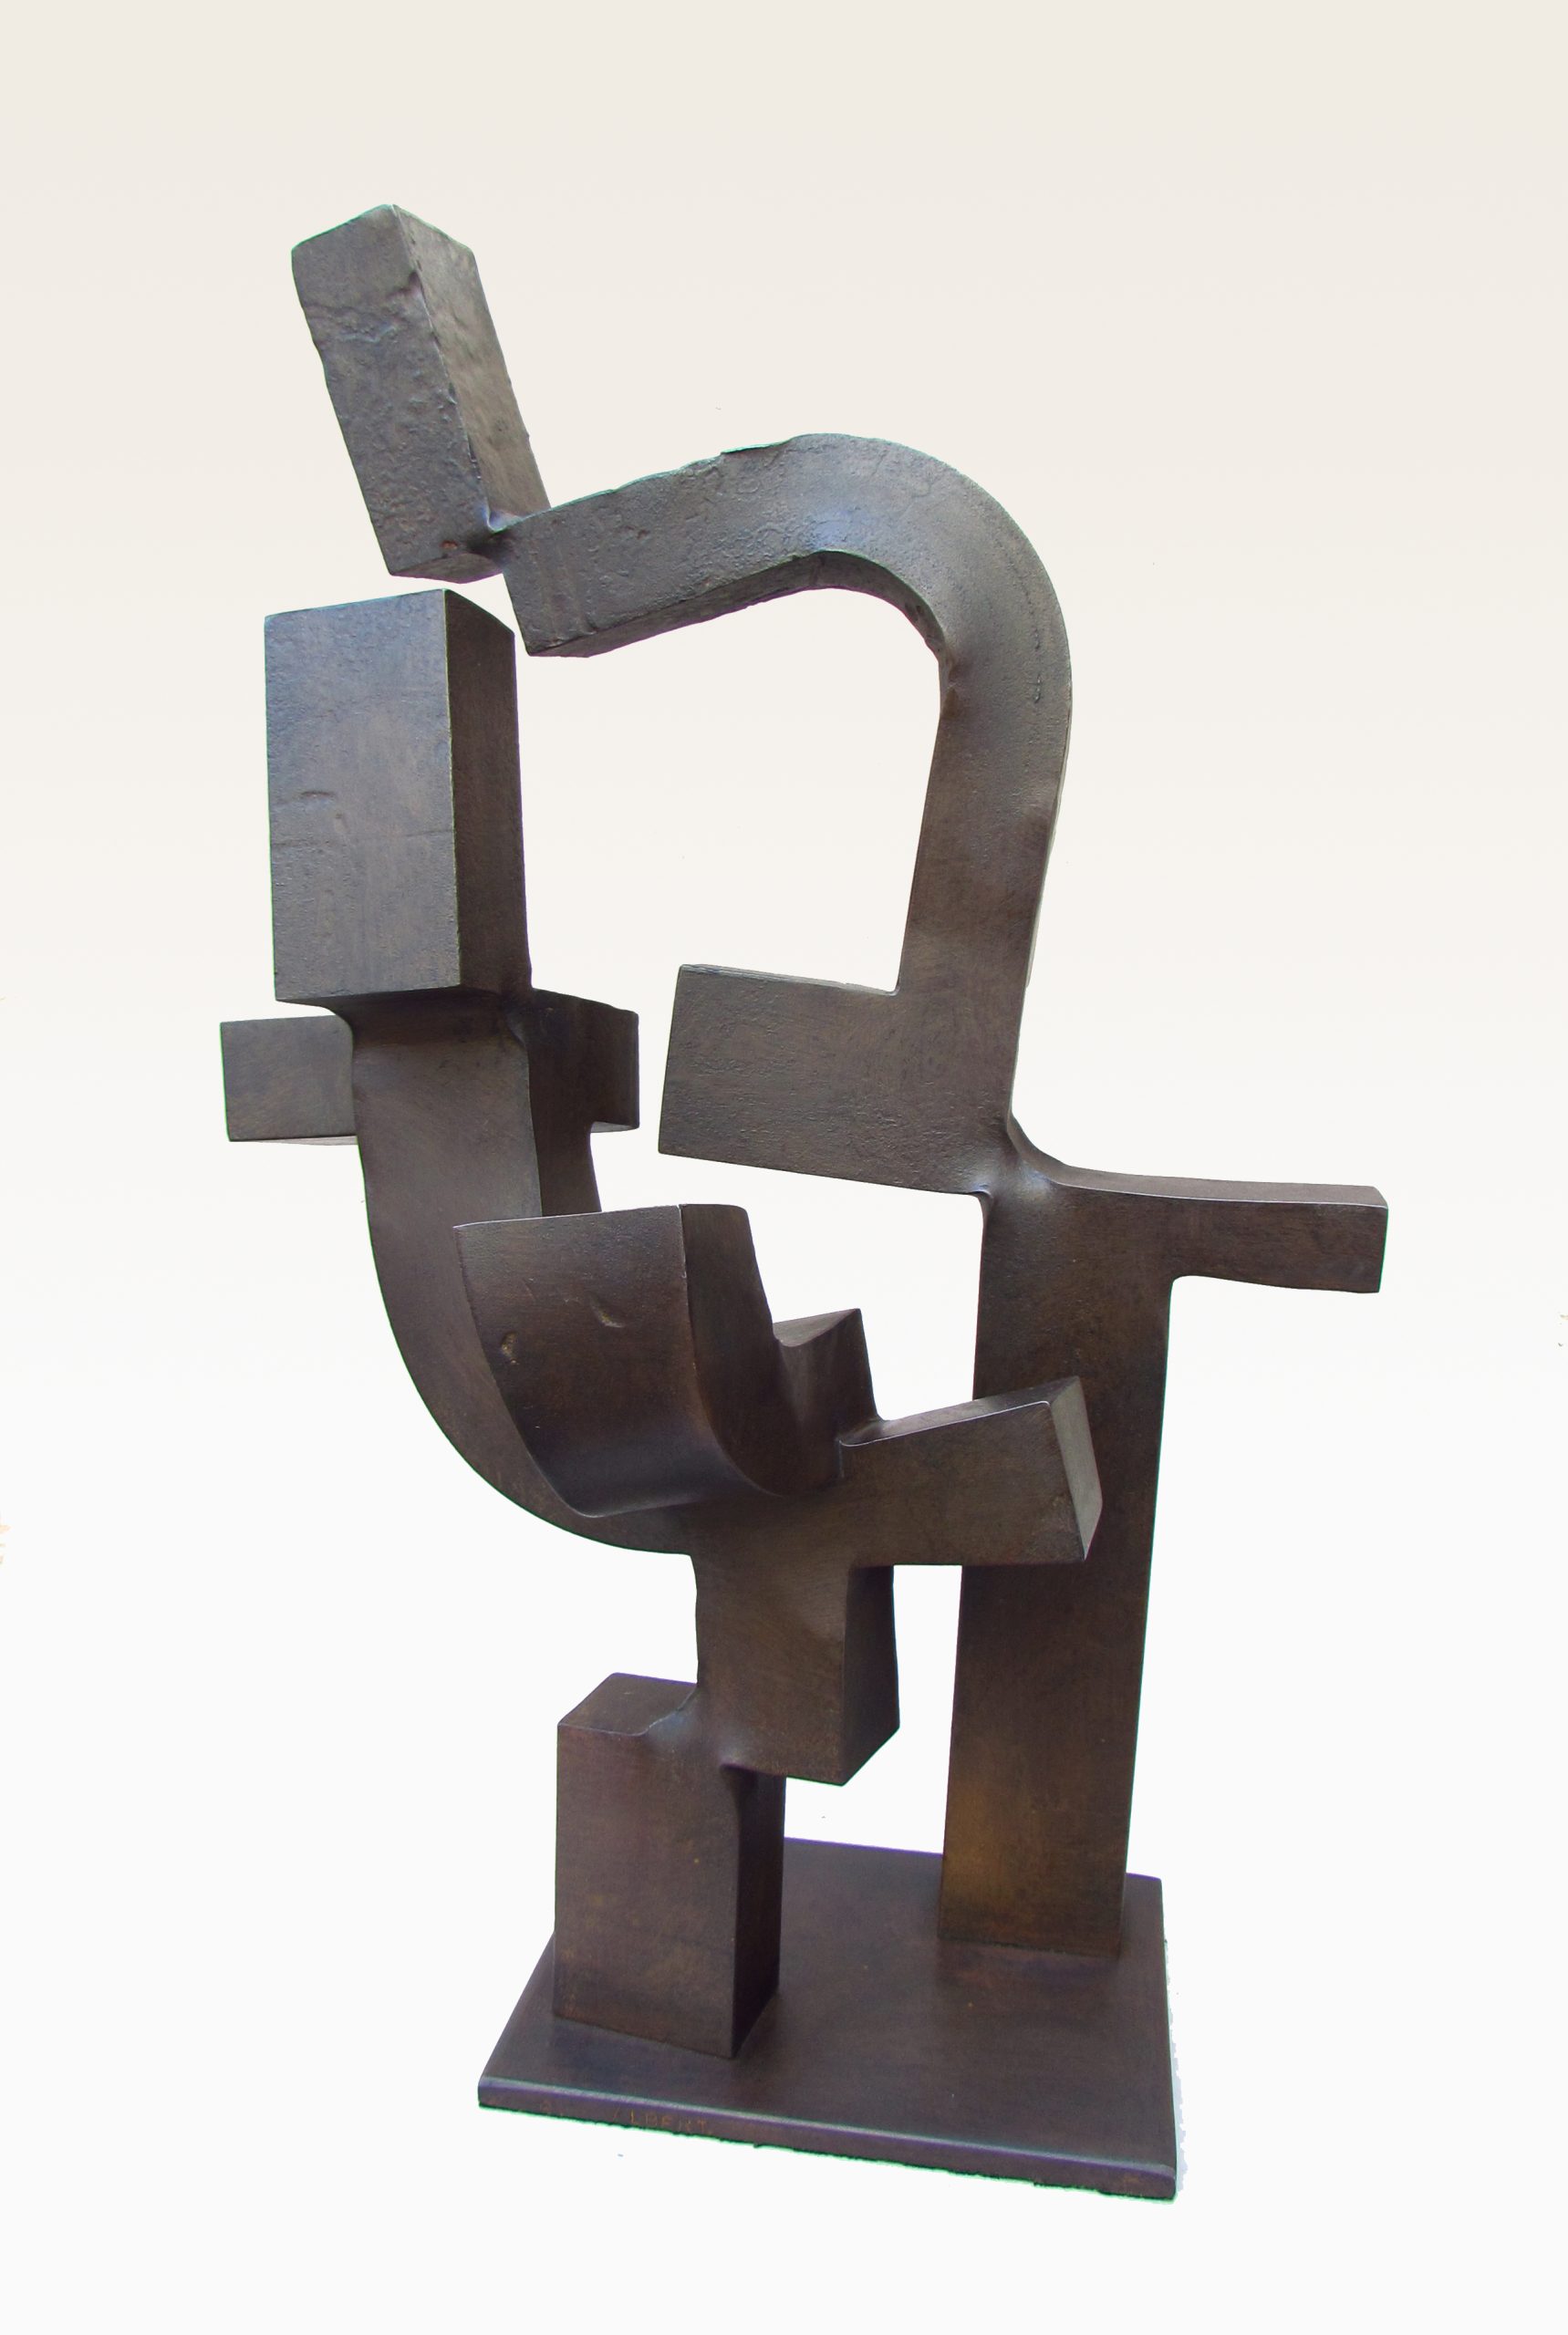 carlos albert sculpture in iron